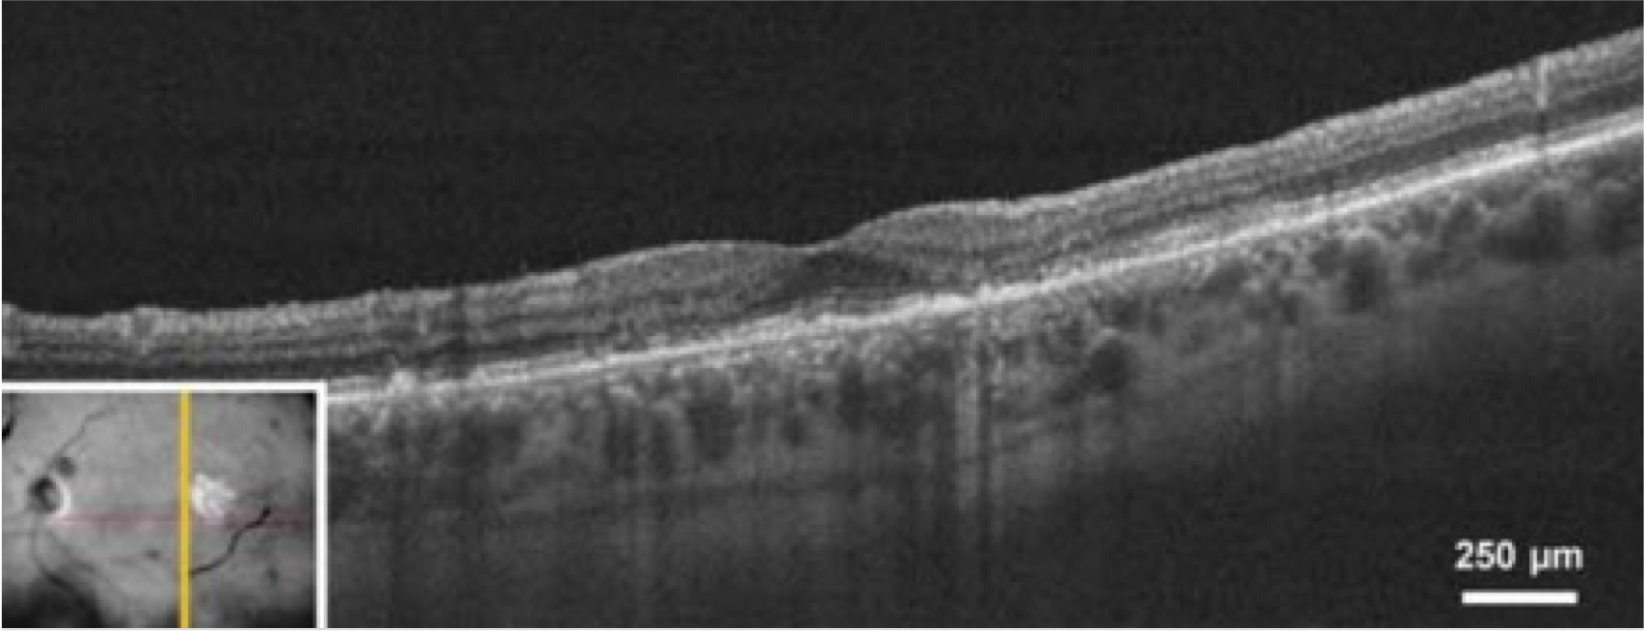 dryAMD.eu Optical coherence tomography (OCT) image of the eye.